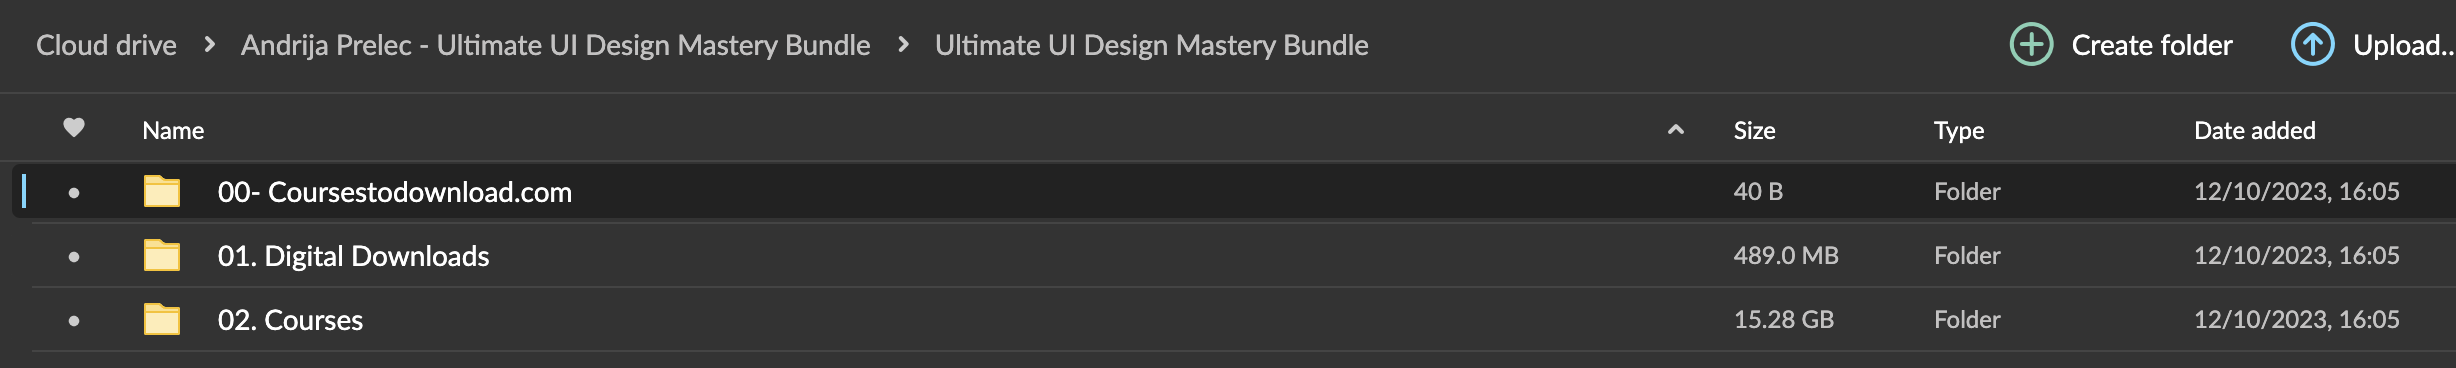 Andrija Prelec - Ultimate UI Design Mastery Bundle Download